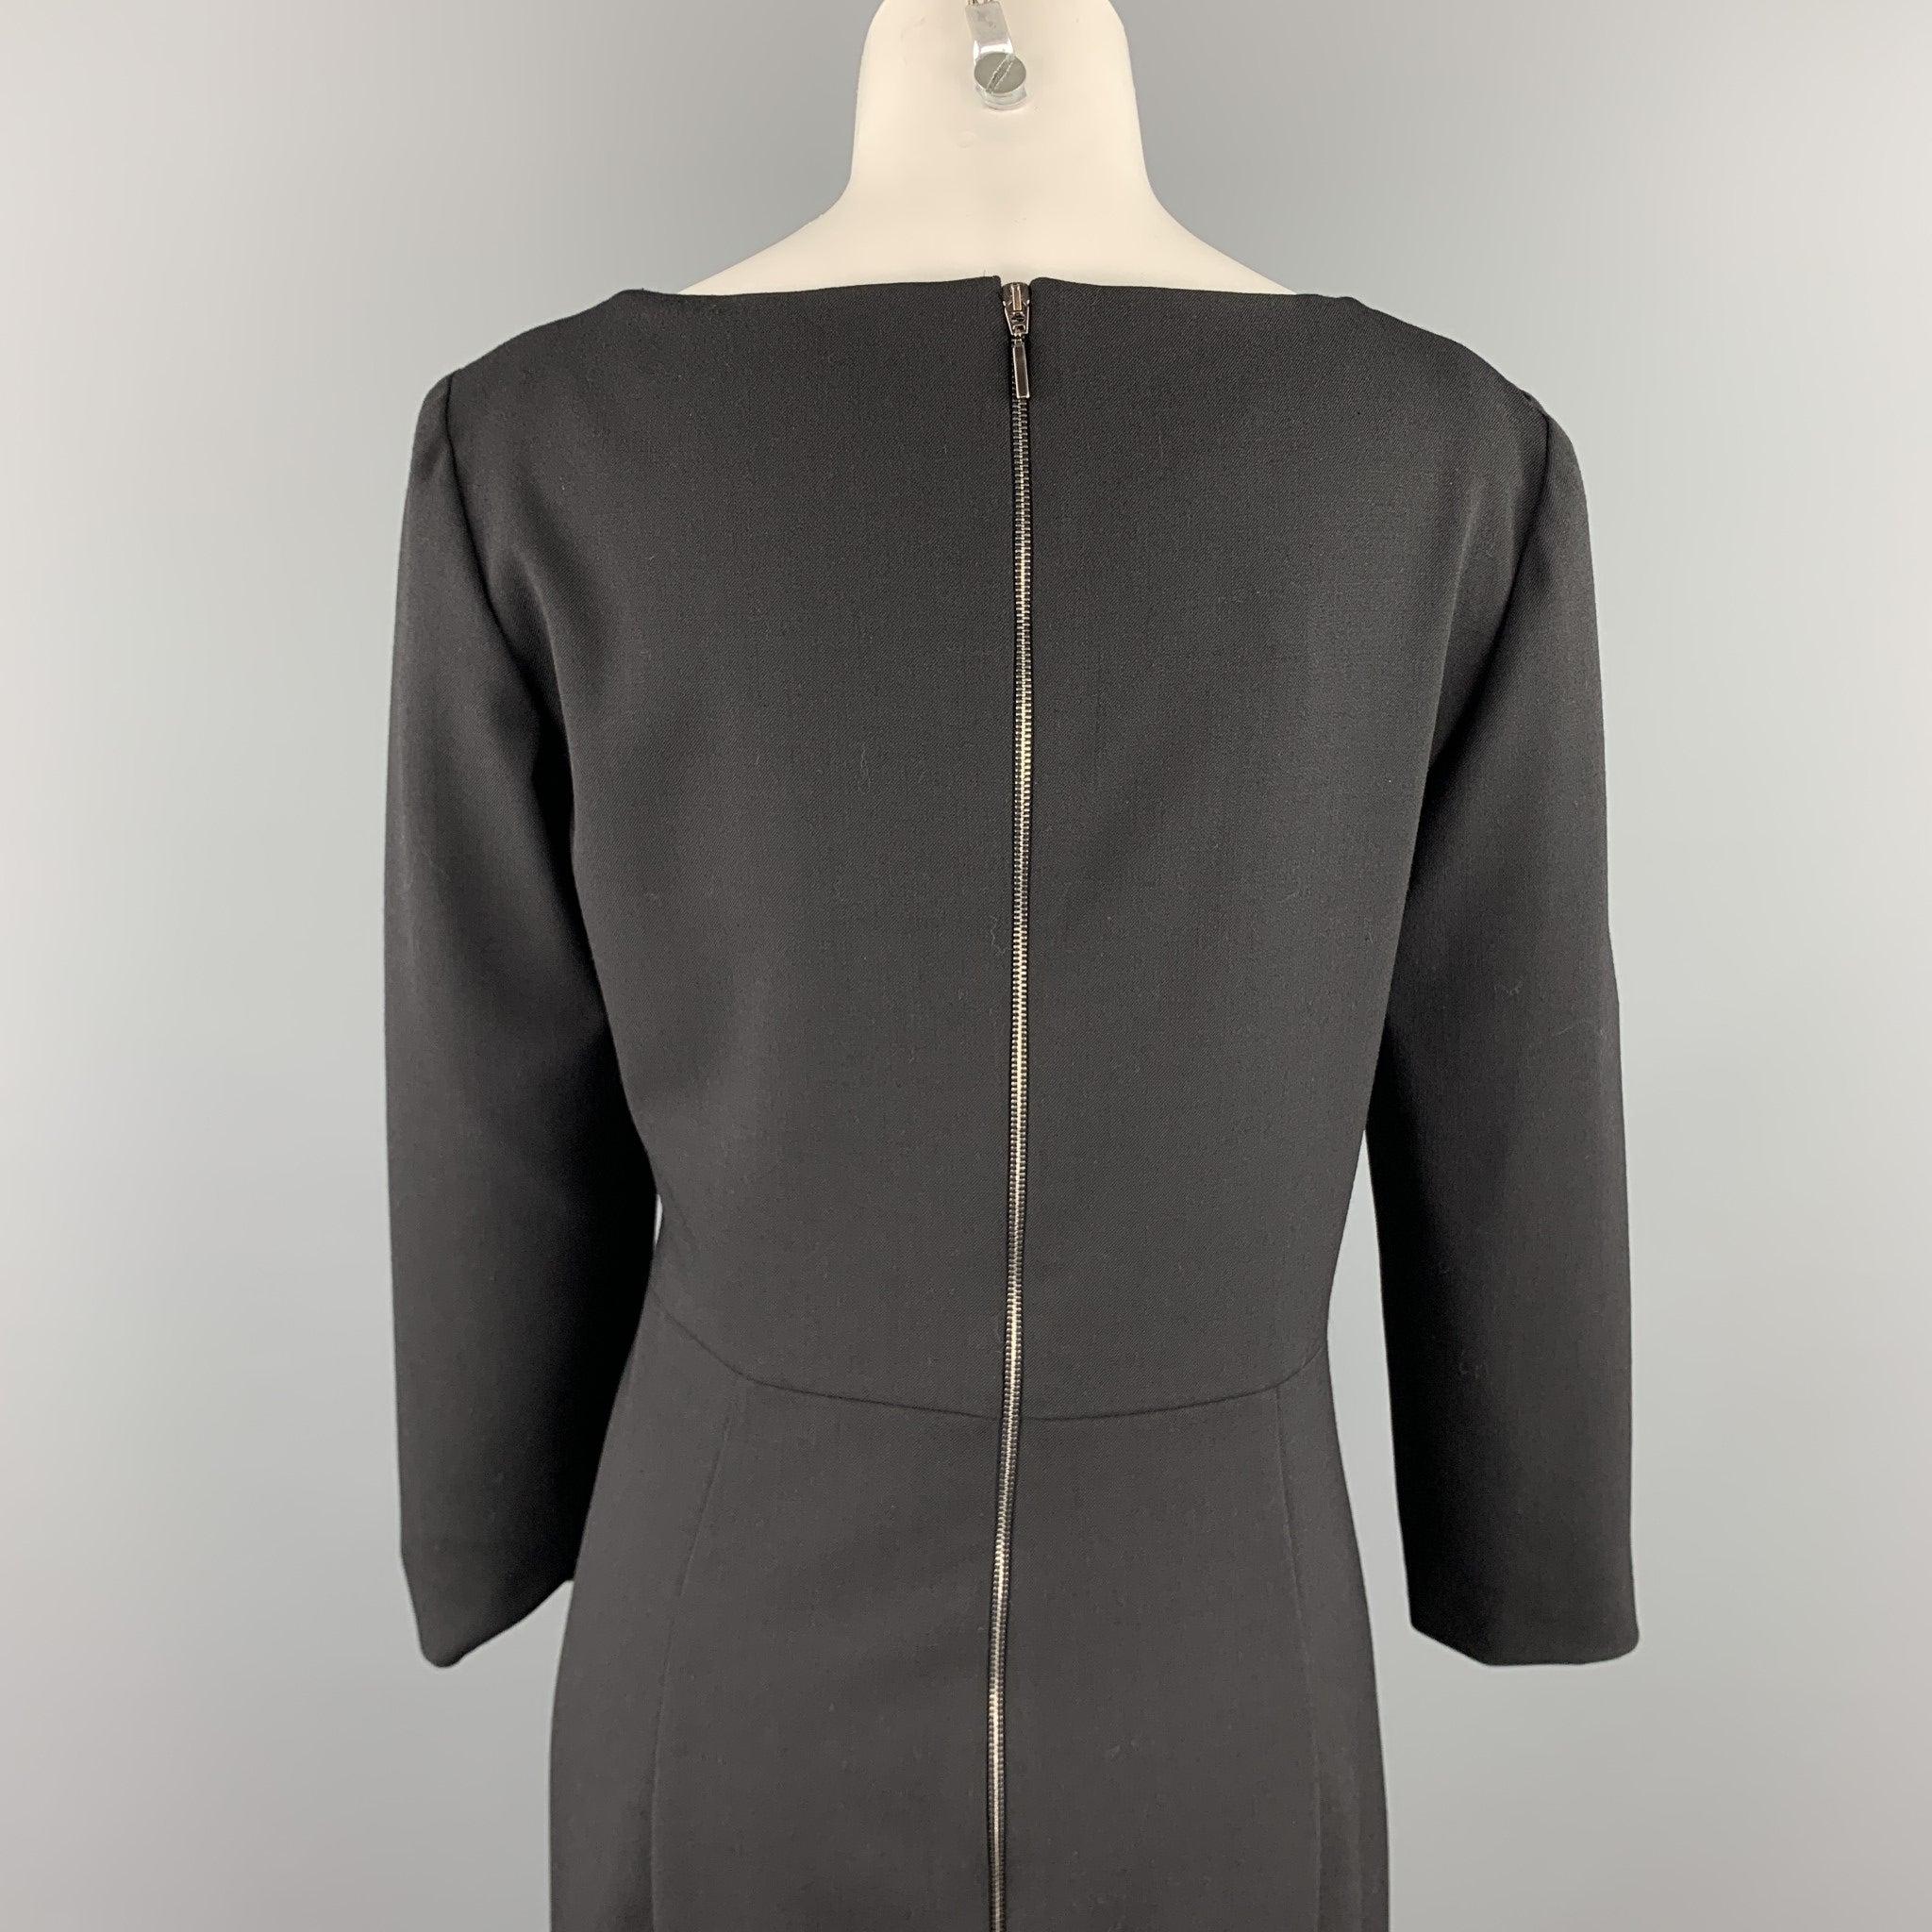 ARMANI COLLEZIONI Size 8 Black Wool Blend Shift Dress For Sale 1